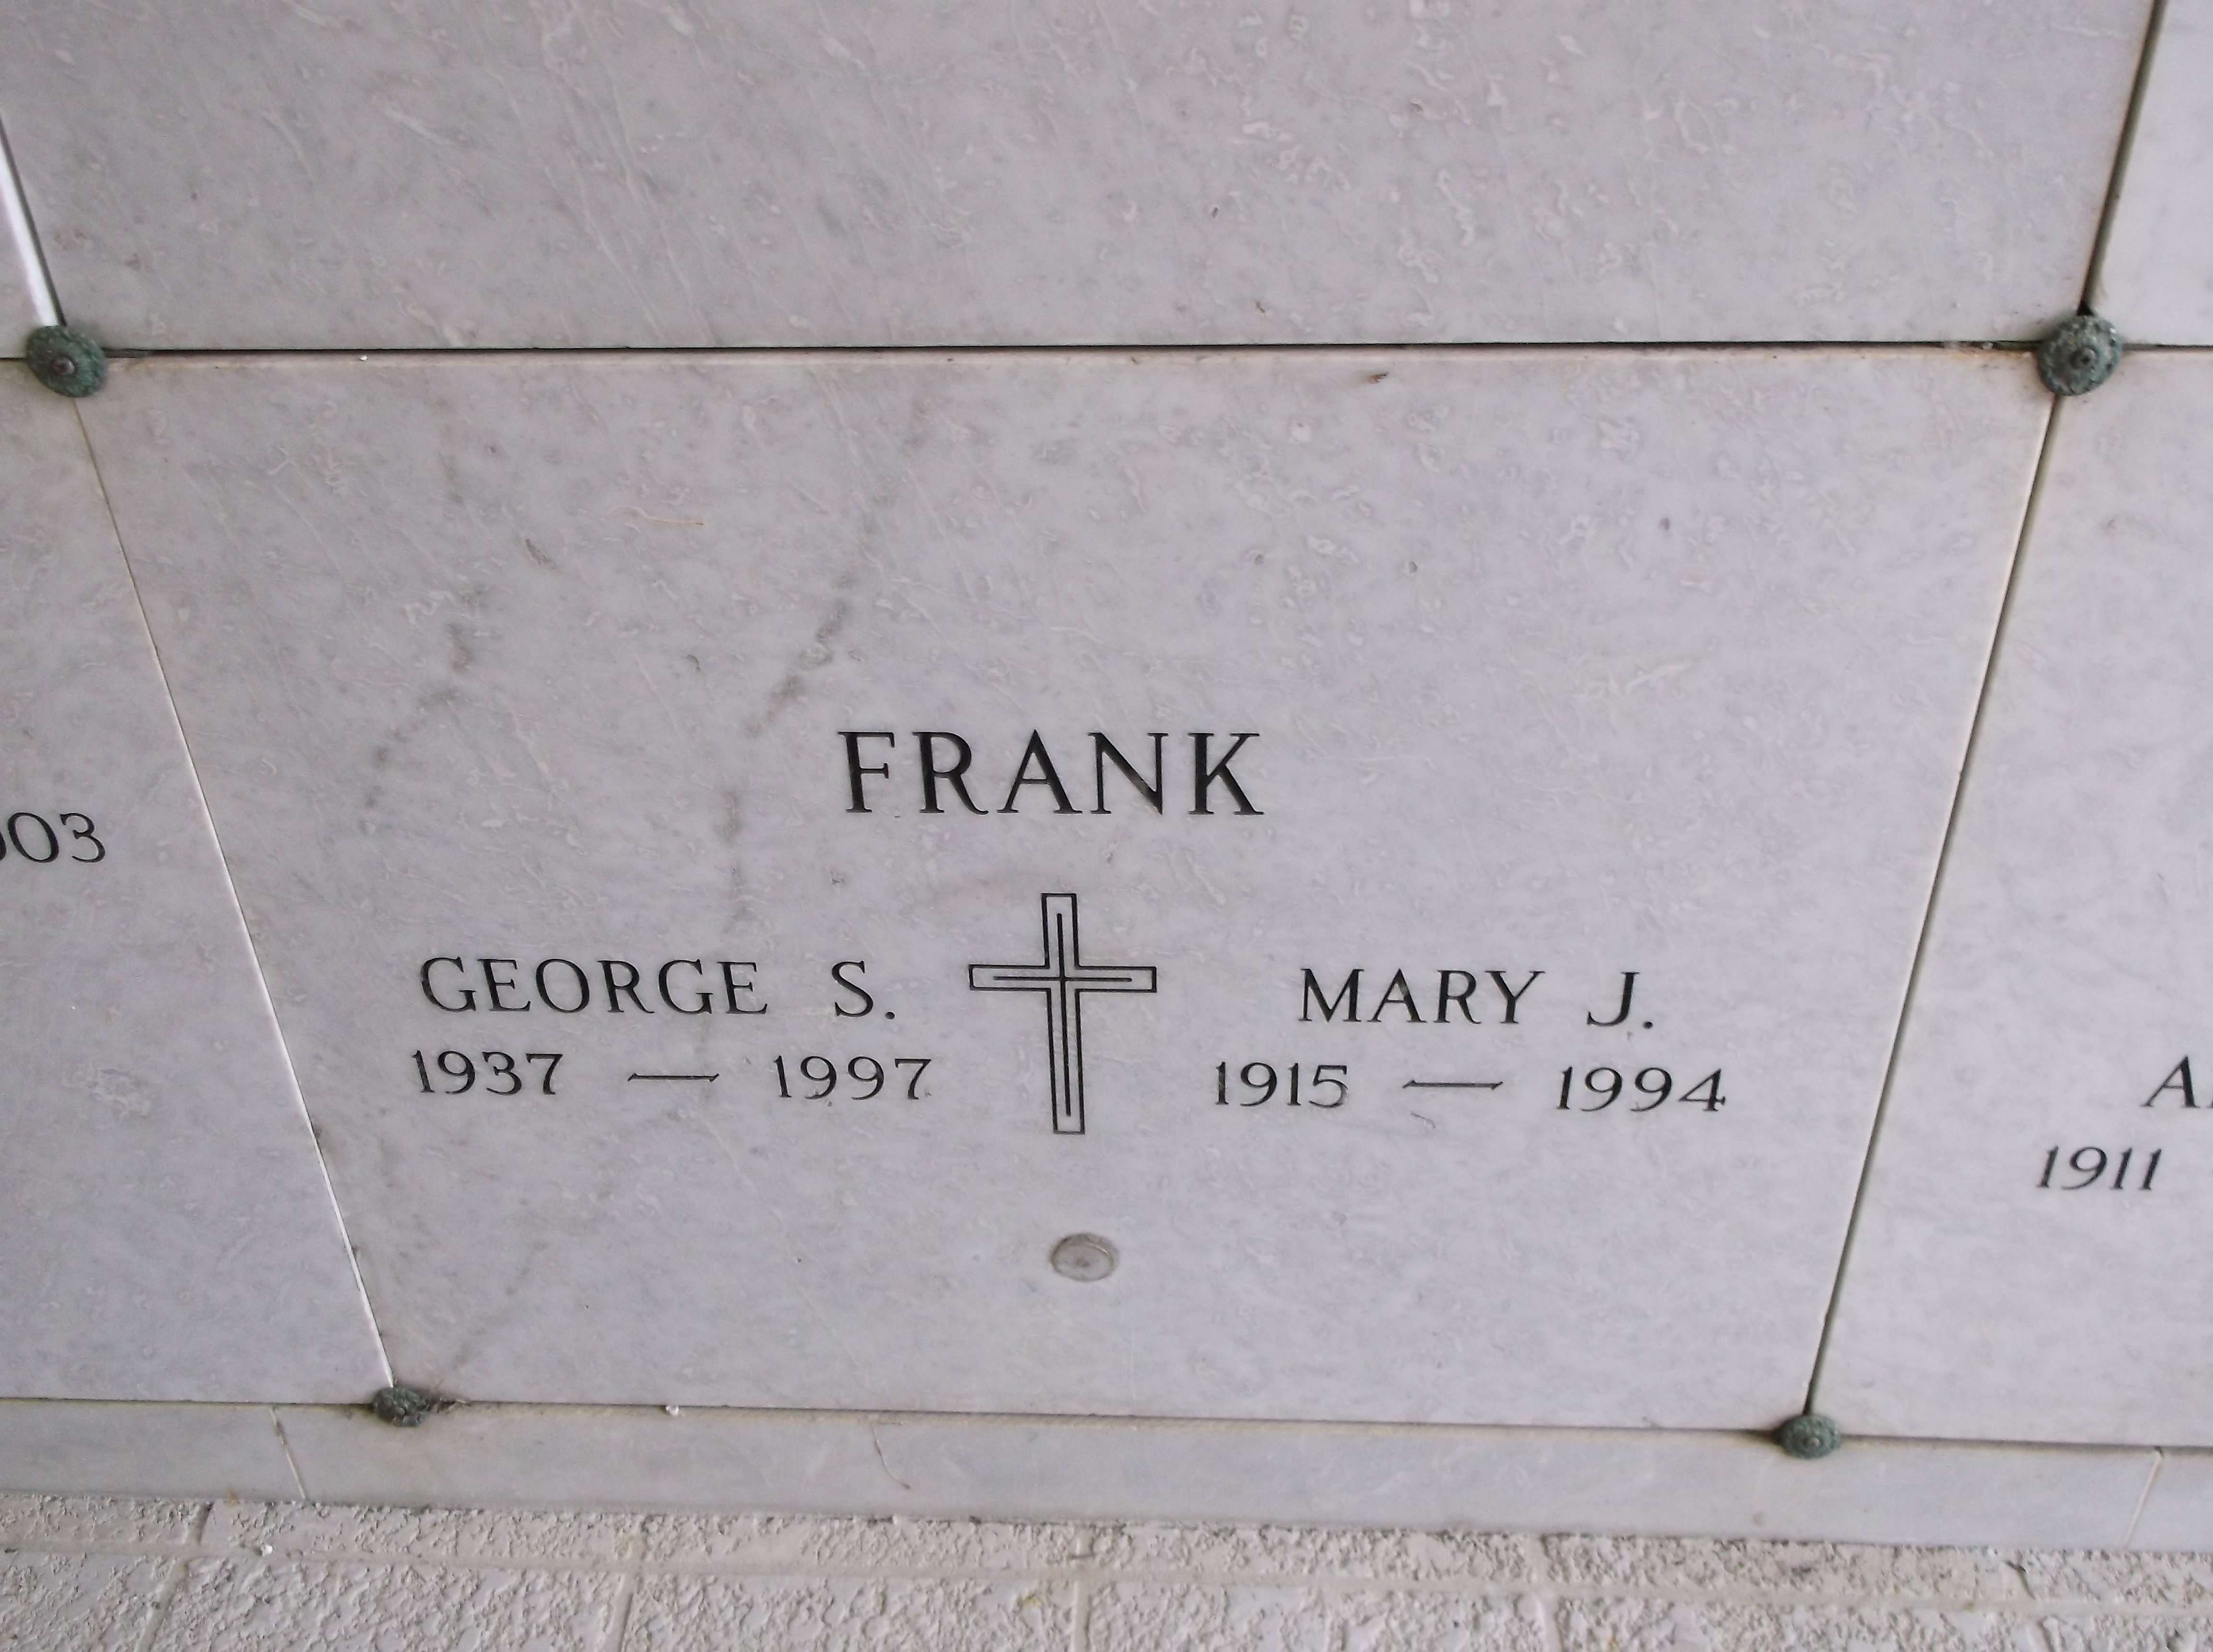 George S Frank